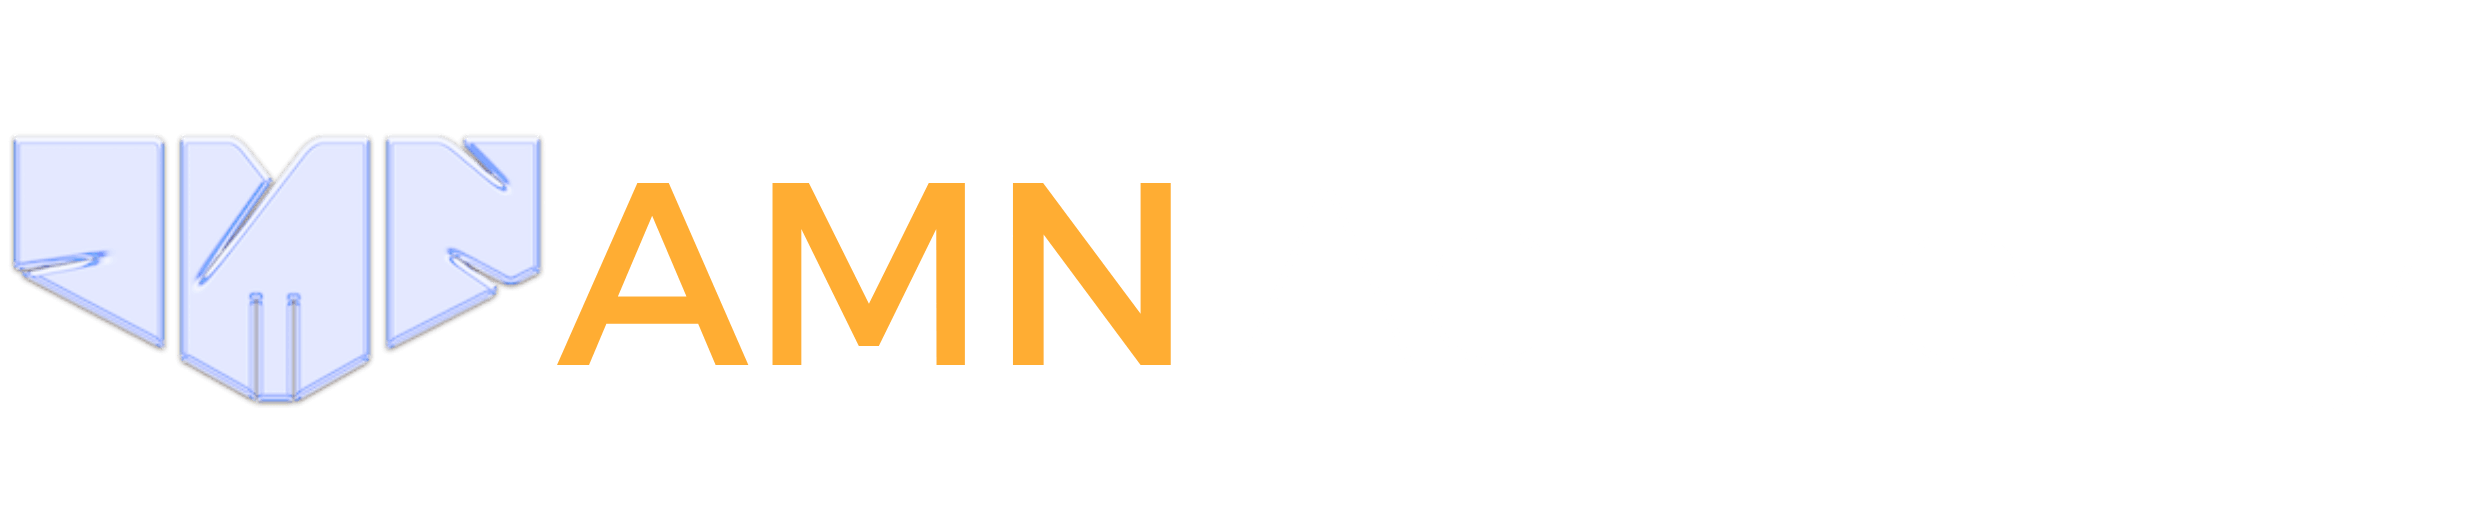 Amn Academy logo